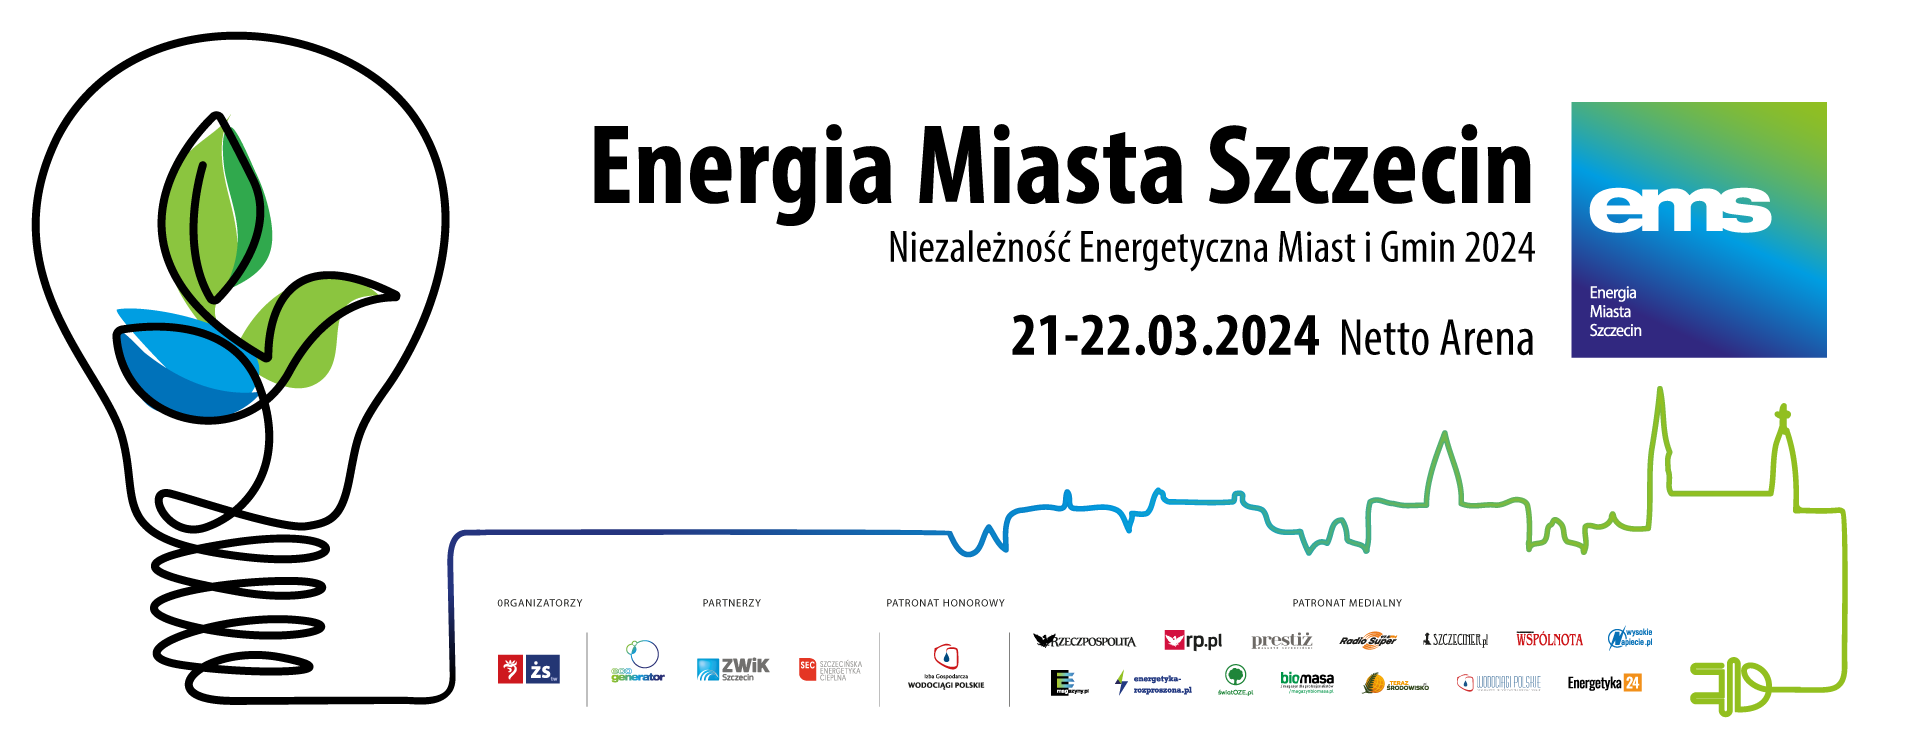 Energia Miasta Szczecin